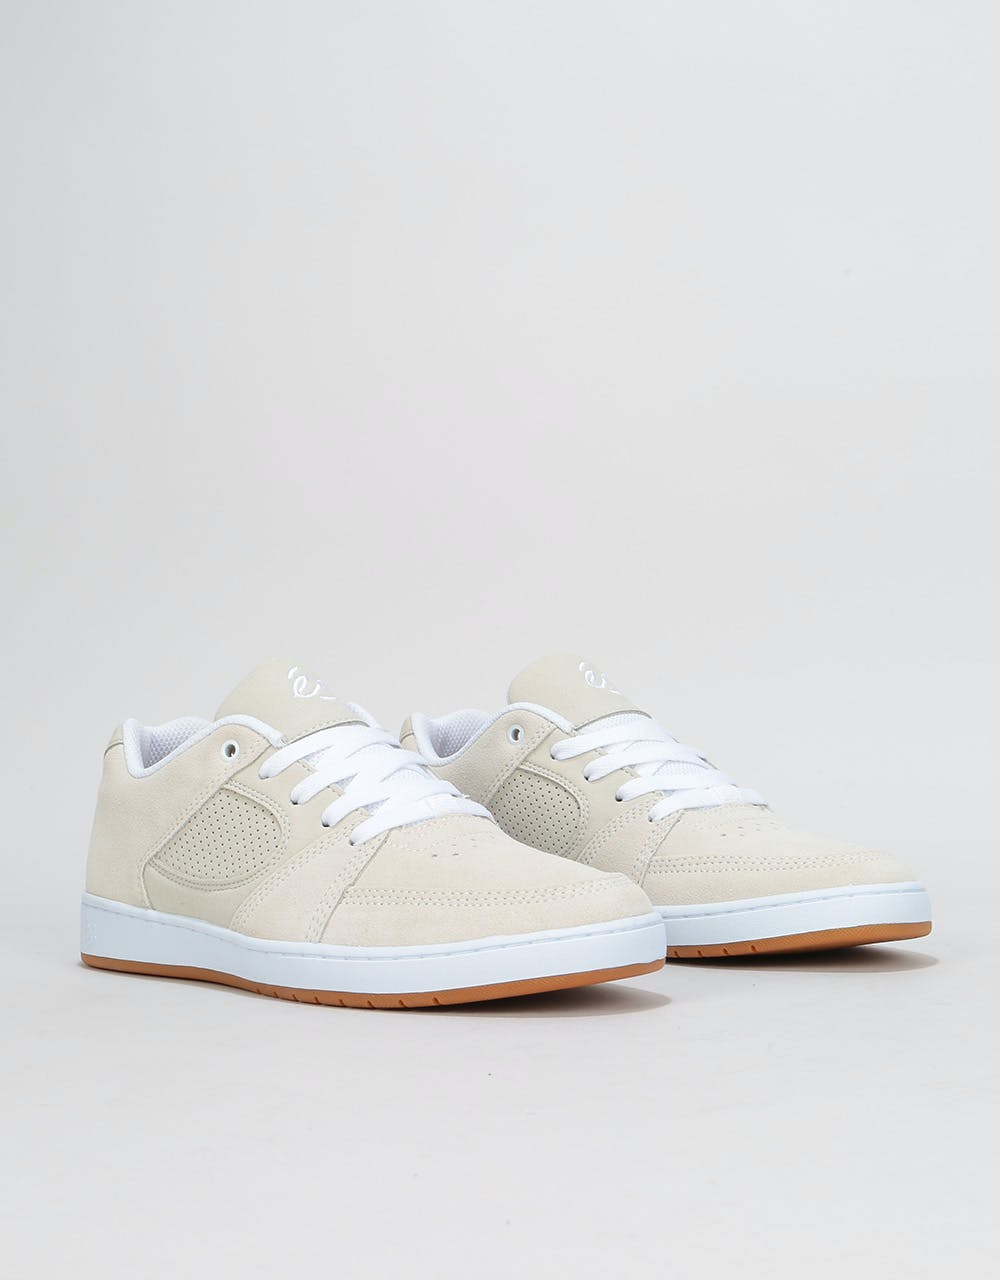 éS Accel Slim Skate Shoes - White/White/Gum